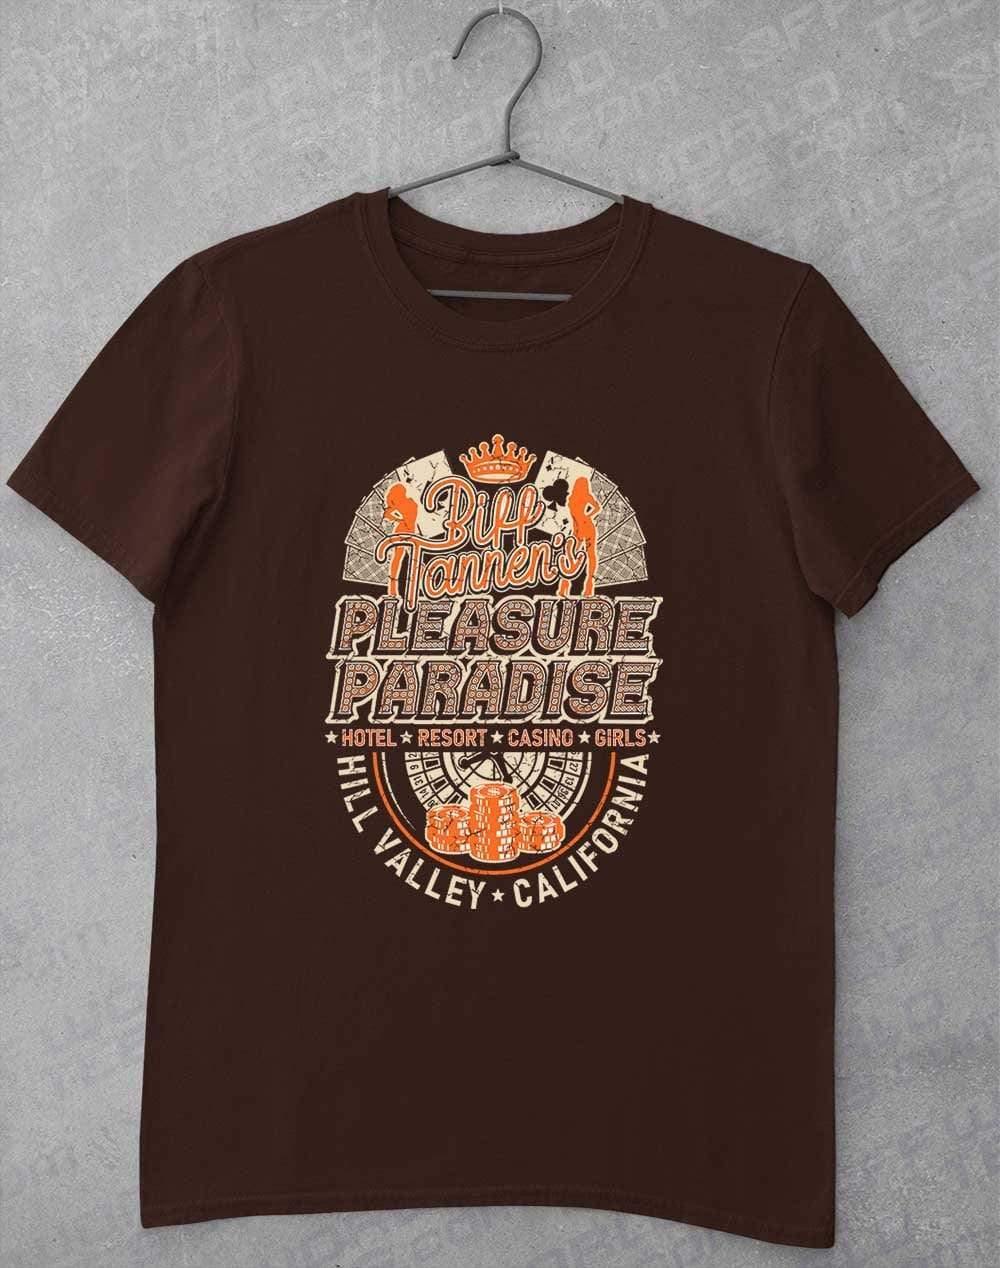 Biff Tannen's Pleasure Paradise T-Shirt S / Dark Chocolate  - Off World Tees